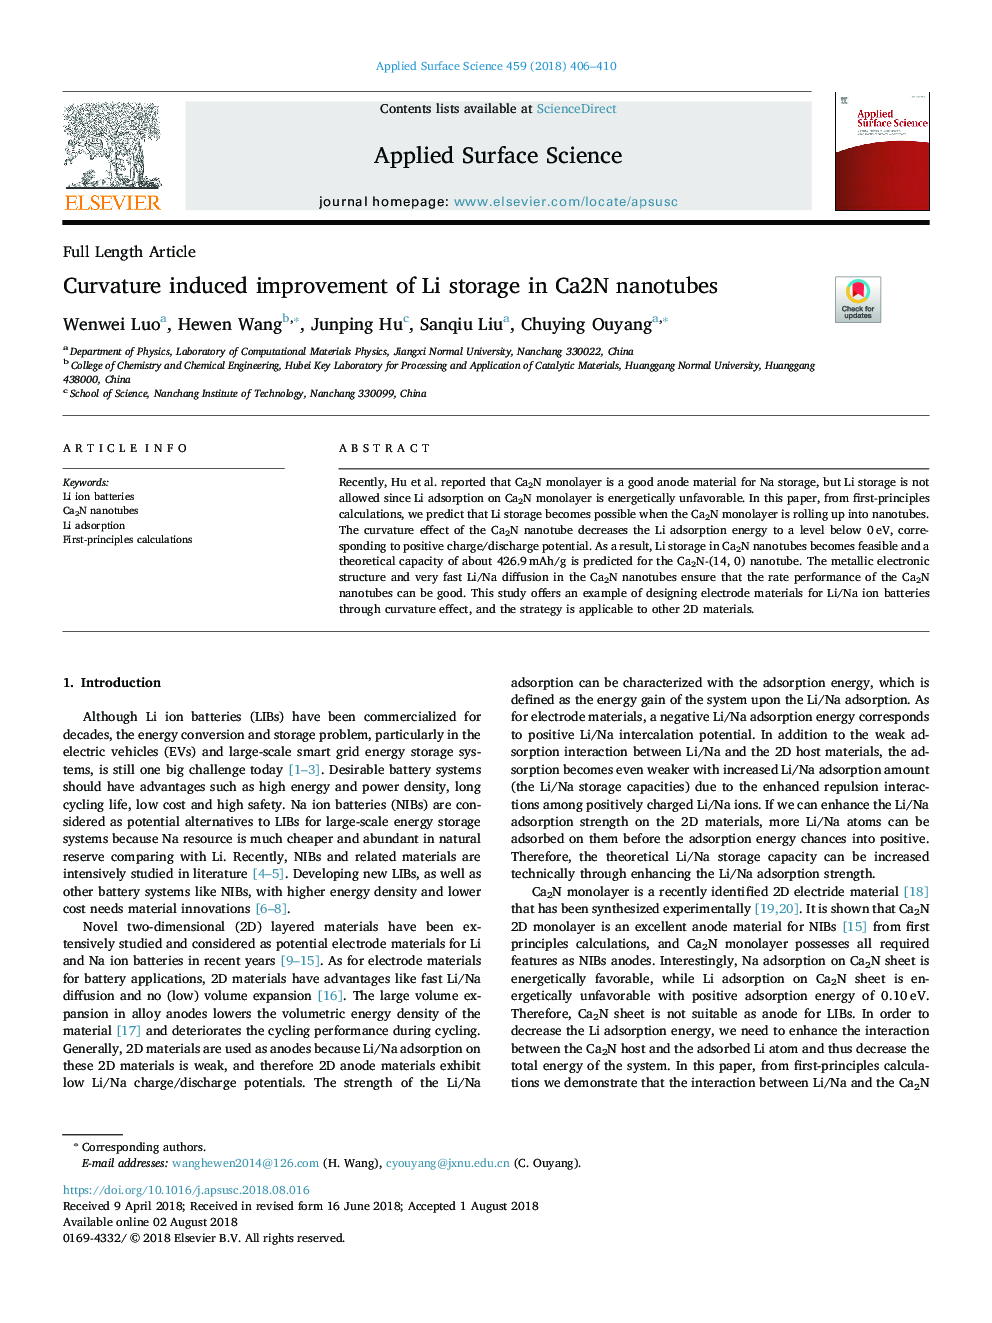 Curvature induced improvement of Li storage in Ca2N nanotubes